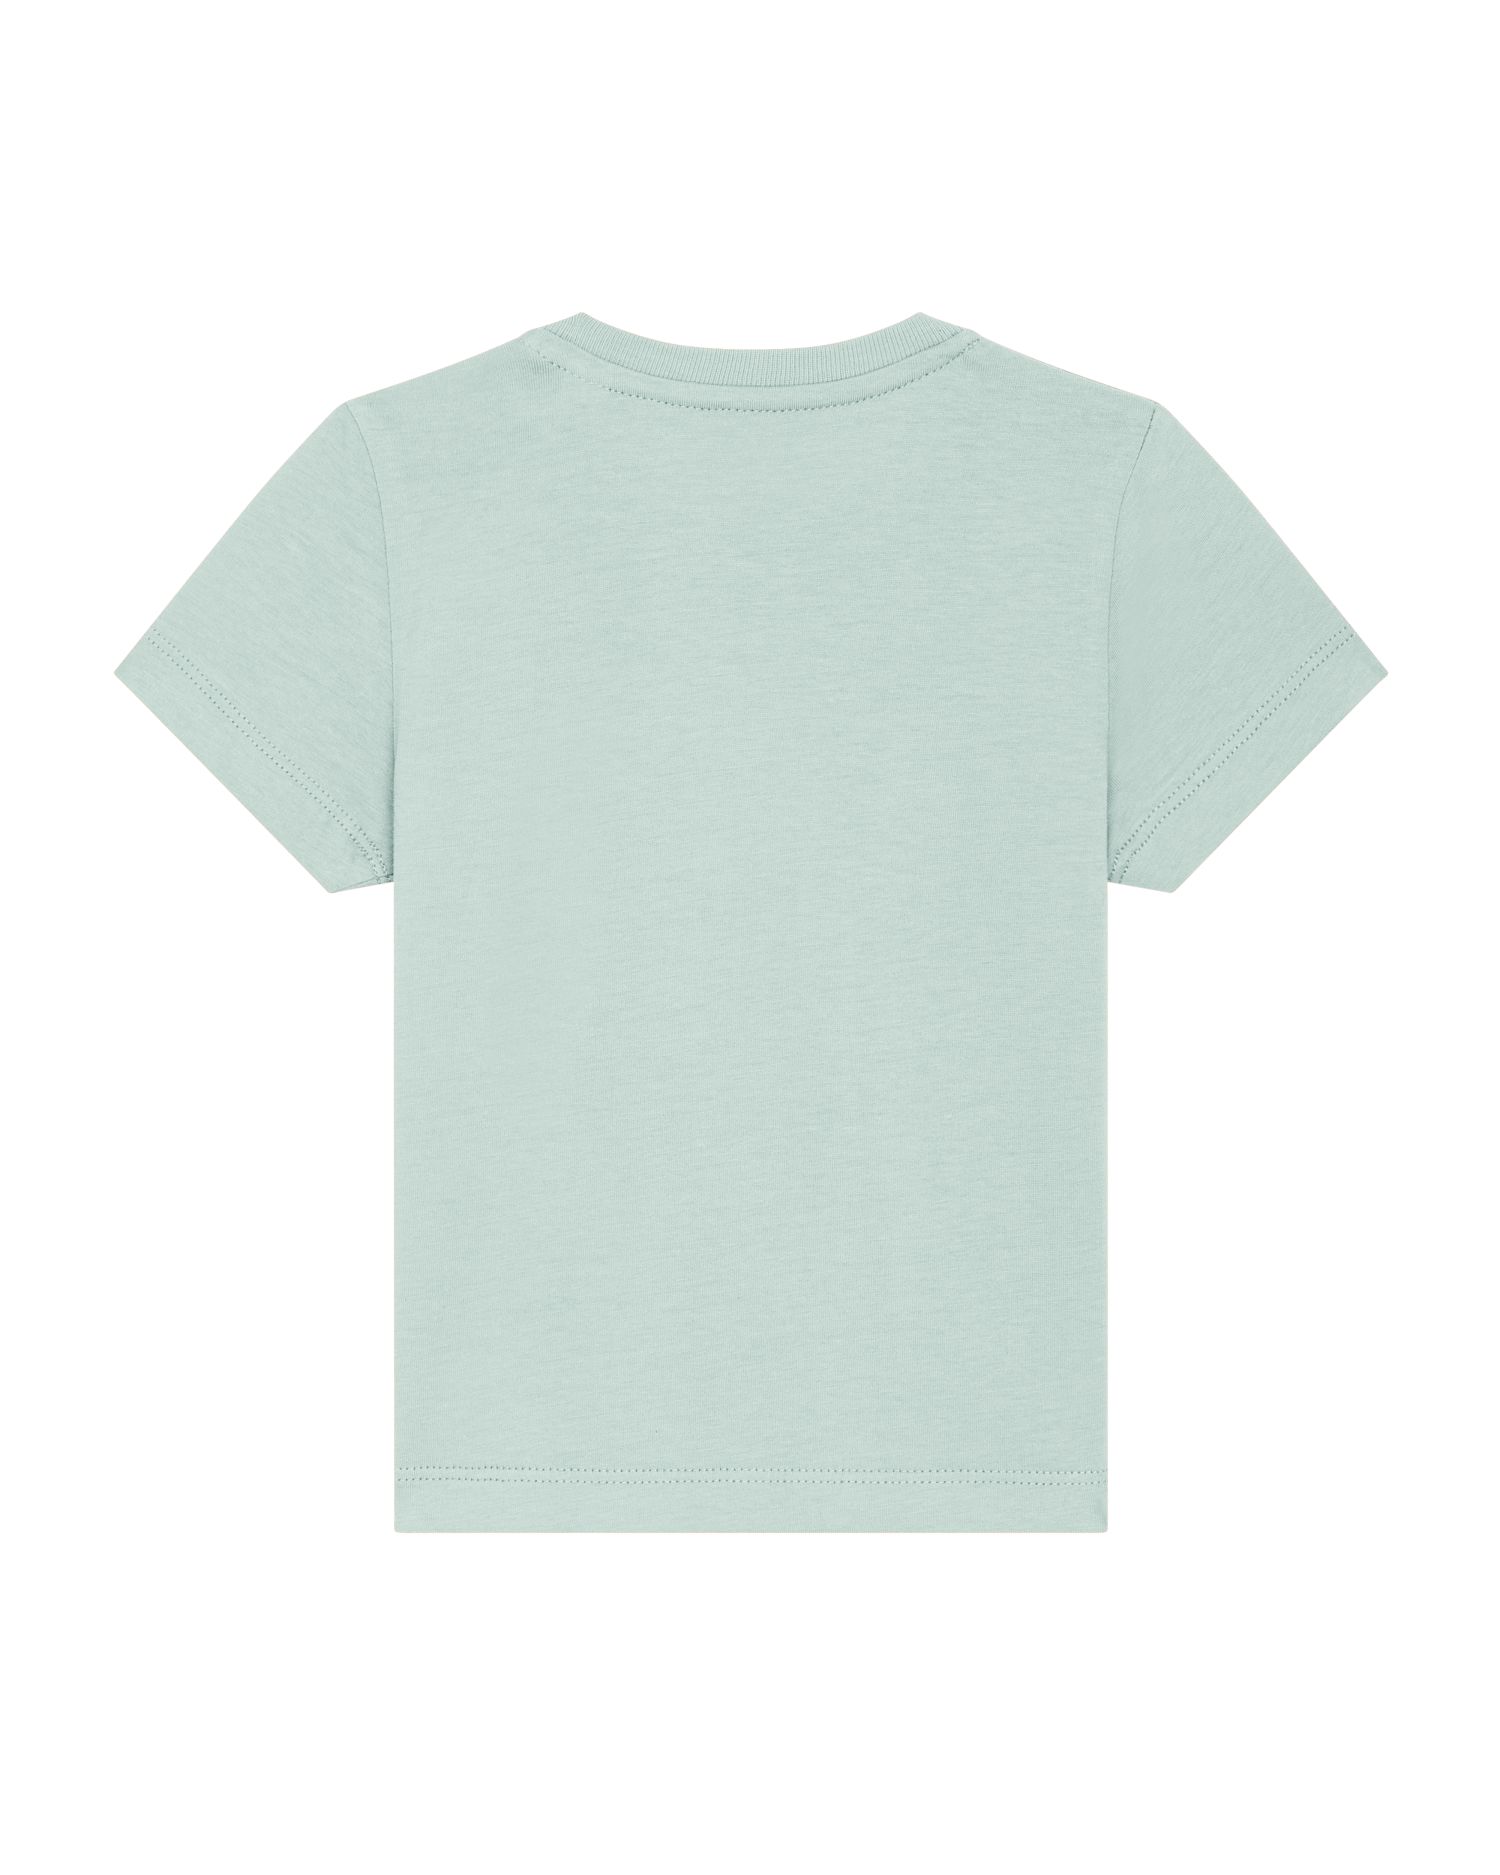 T-Shirt Baby Creator in Farbe Caribbean Blue